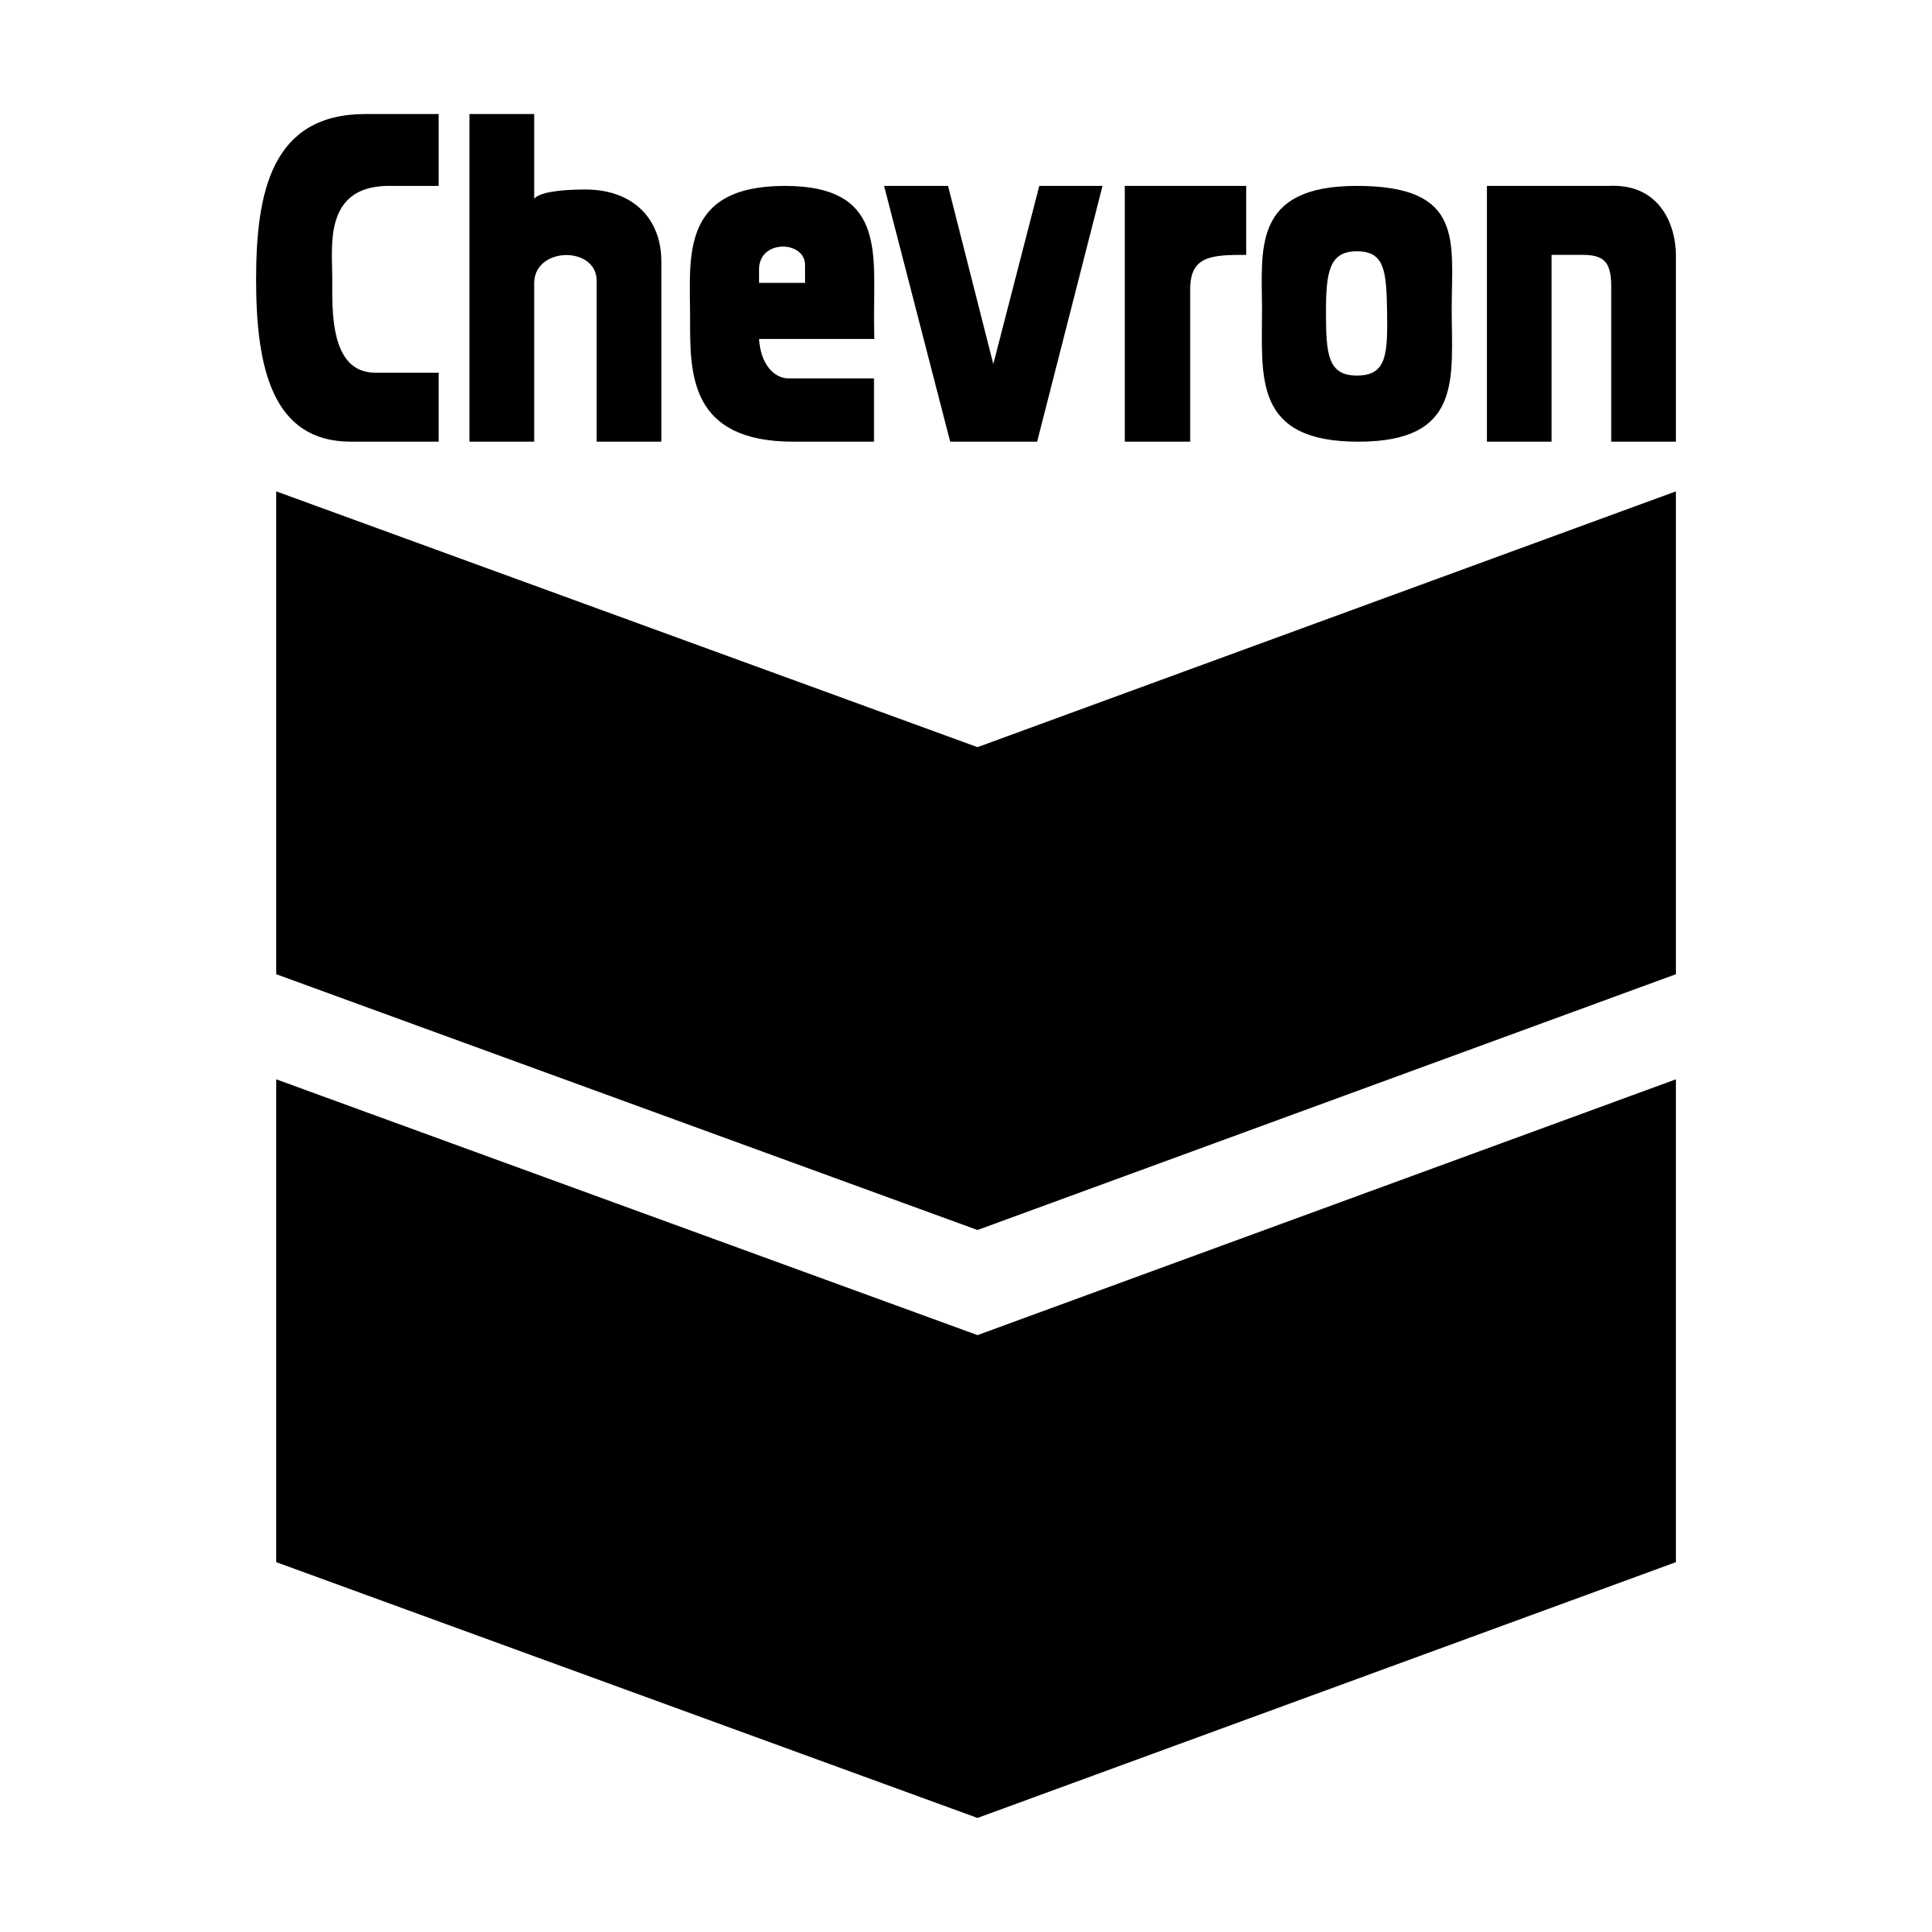 And White Black Chevronlogo Logo - Chevron Logo PNG Transparent & SVG Vector - Freebie Supply